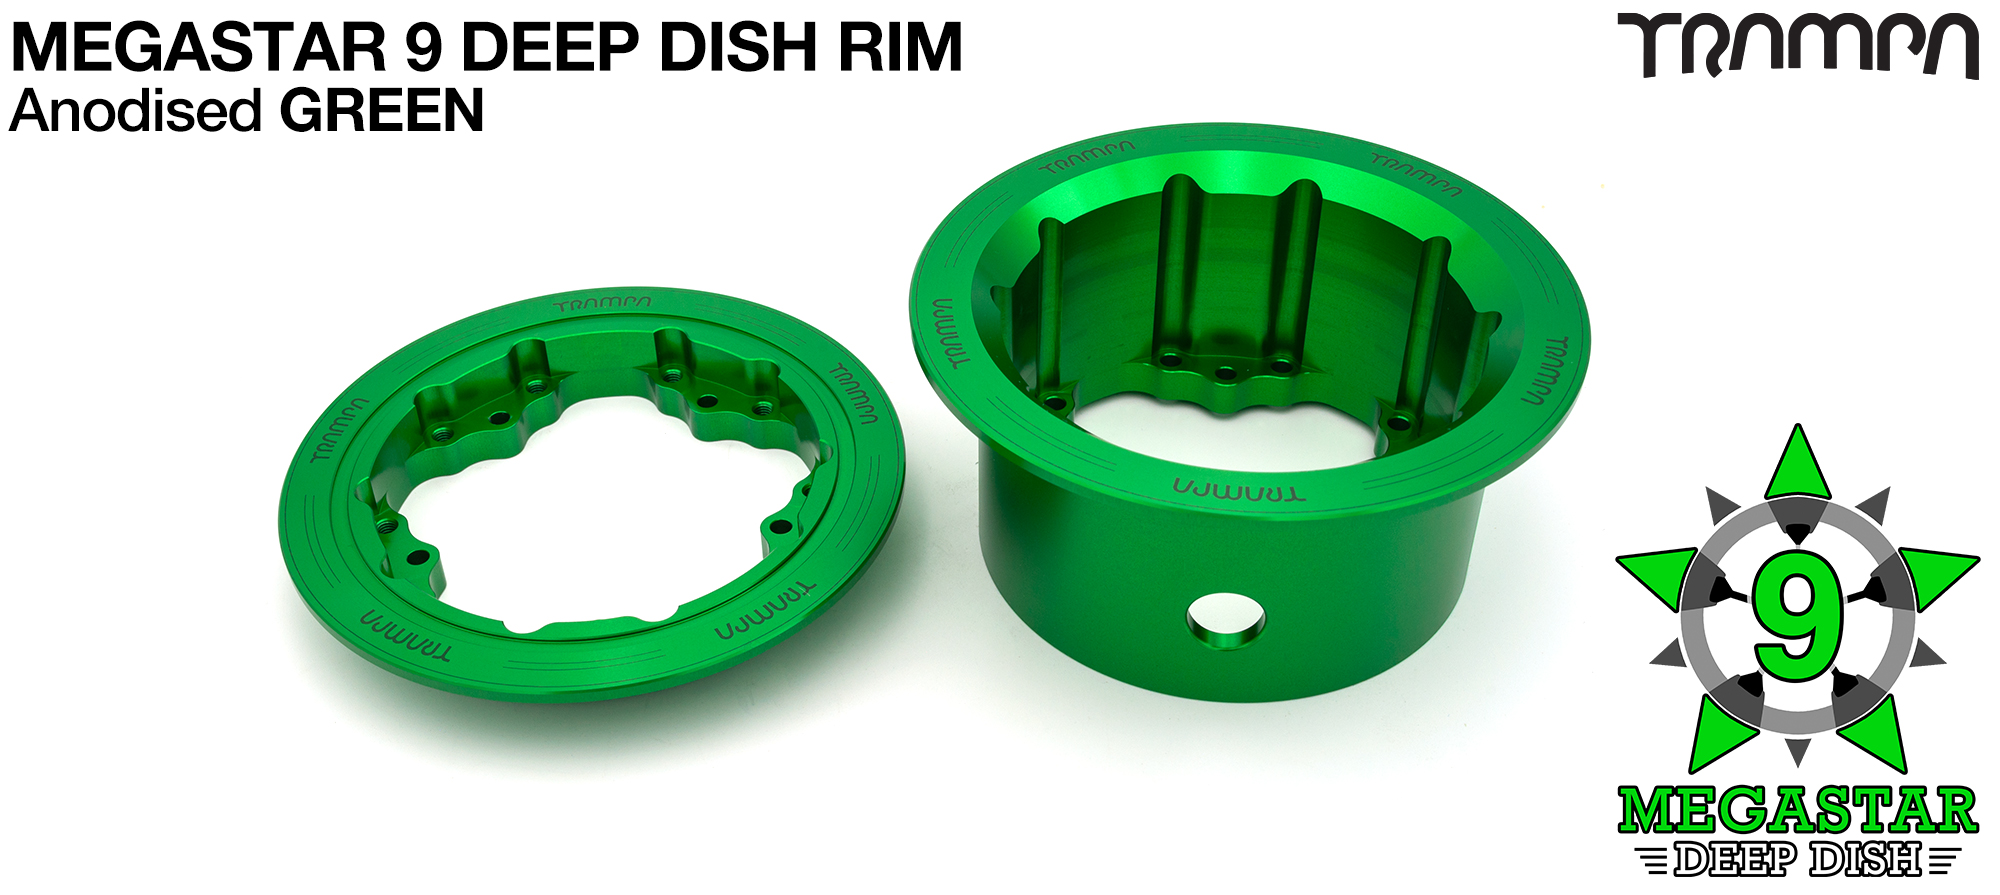 DEEP-DISH MEGASTAR 9 Rims on the FRONT - GREEN